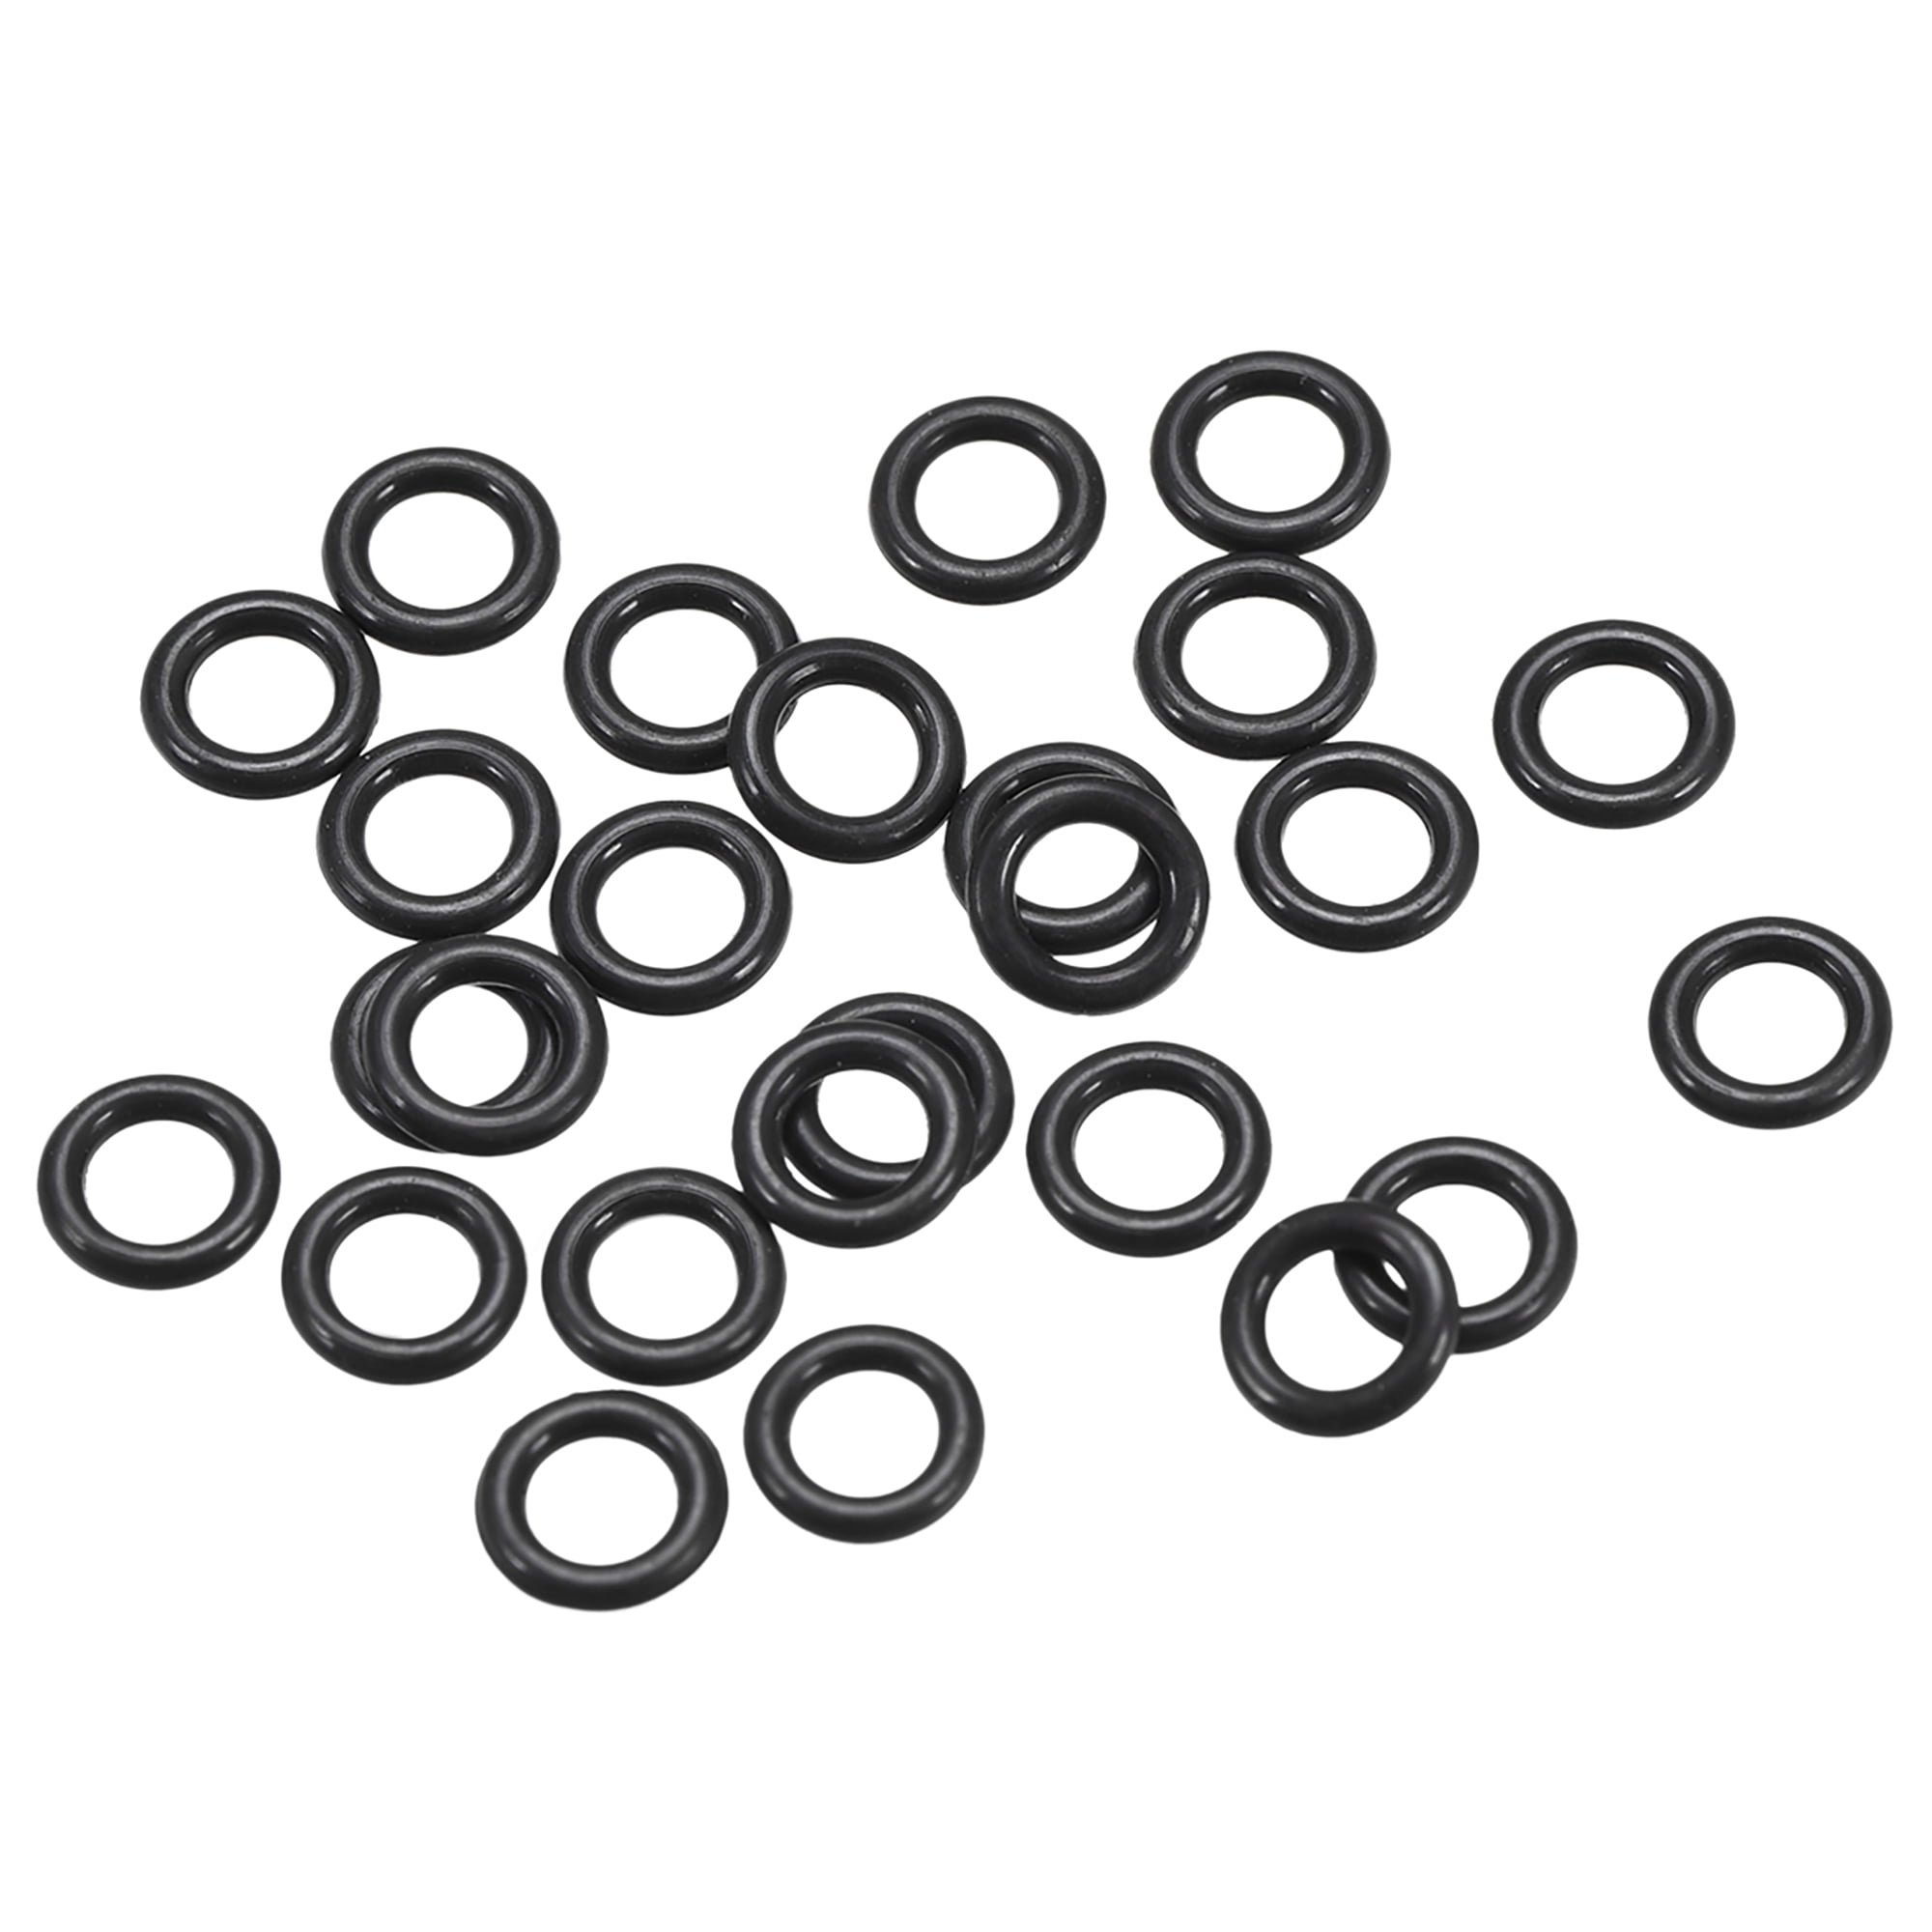 15mm OD uxcell Fluorine Rubber O Rings Seal Gasket Black 25Pcs 3.5mm Width 8mm Inner Diameter